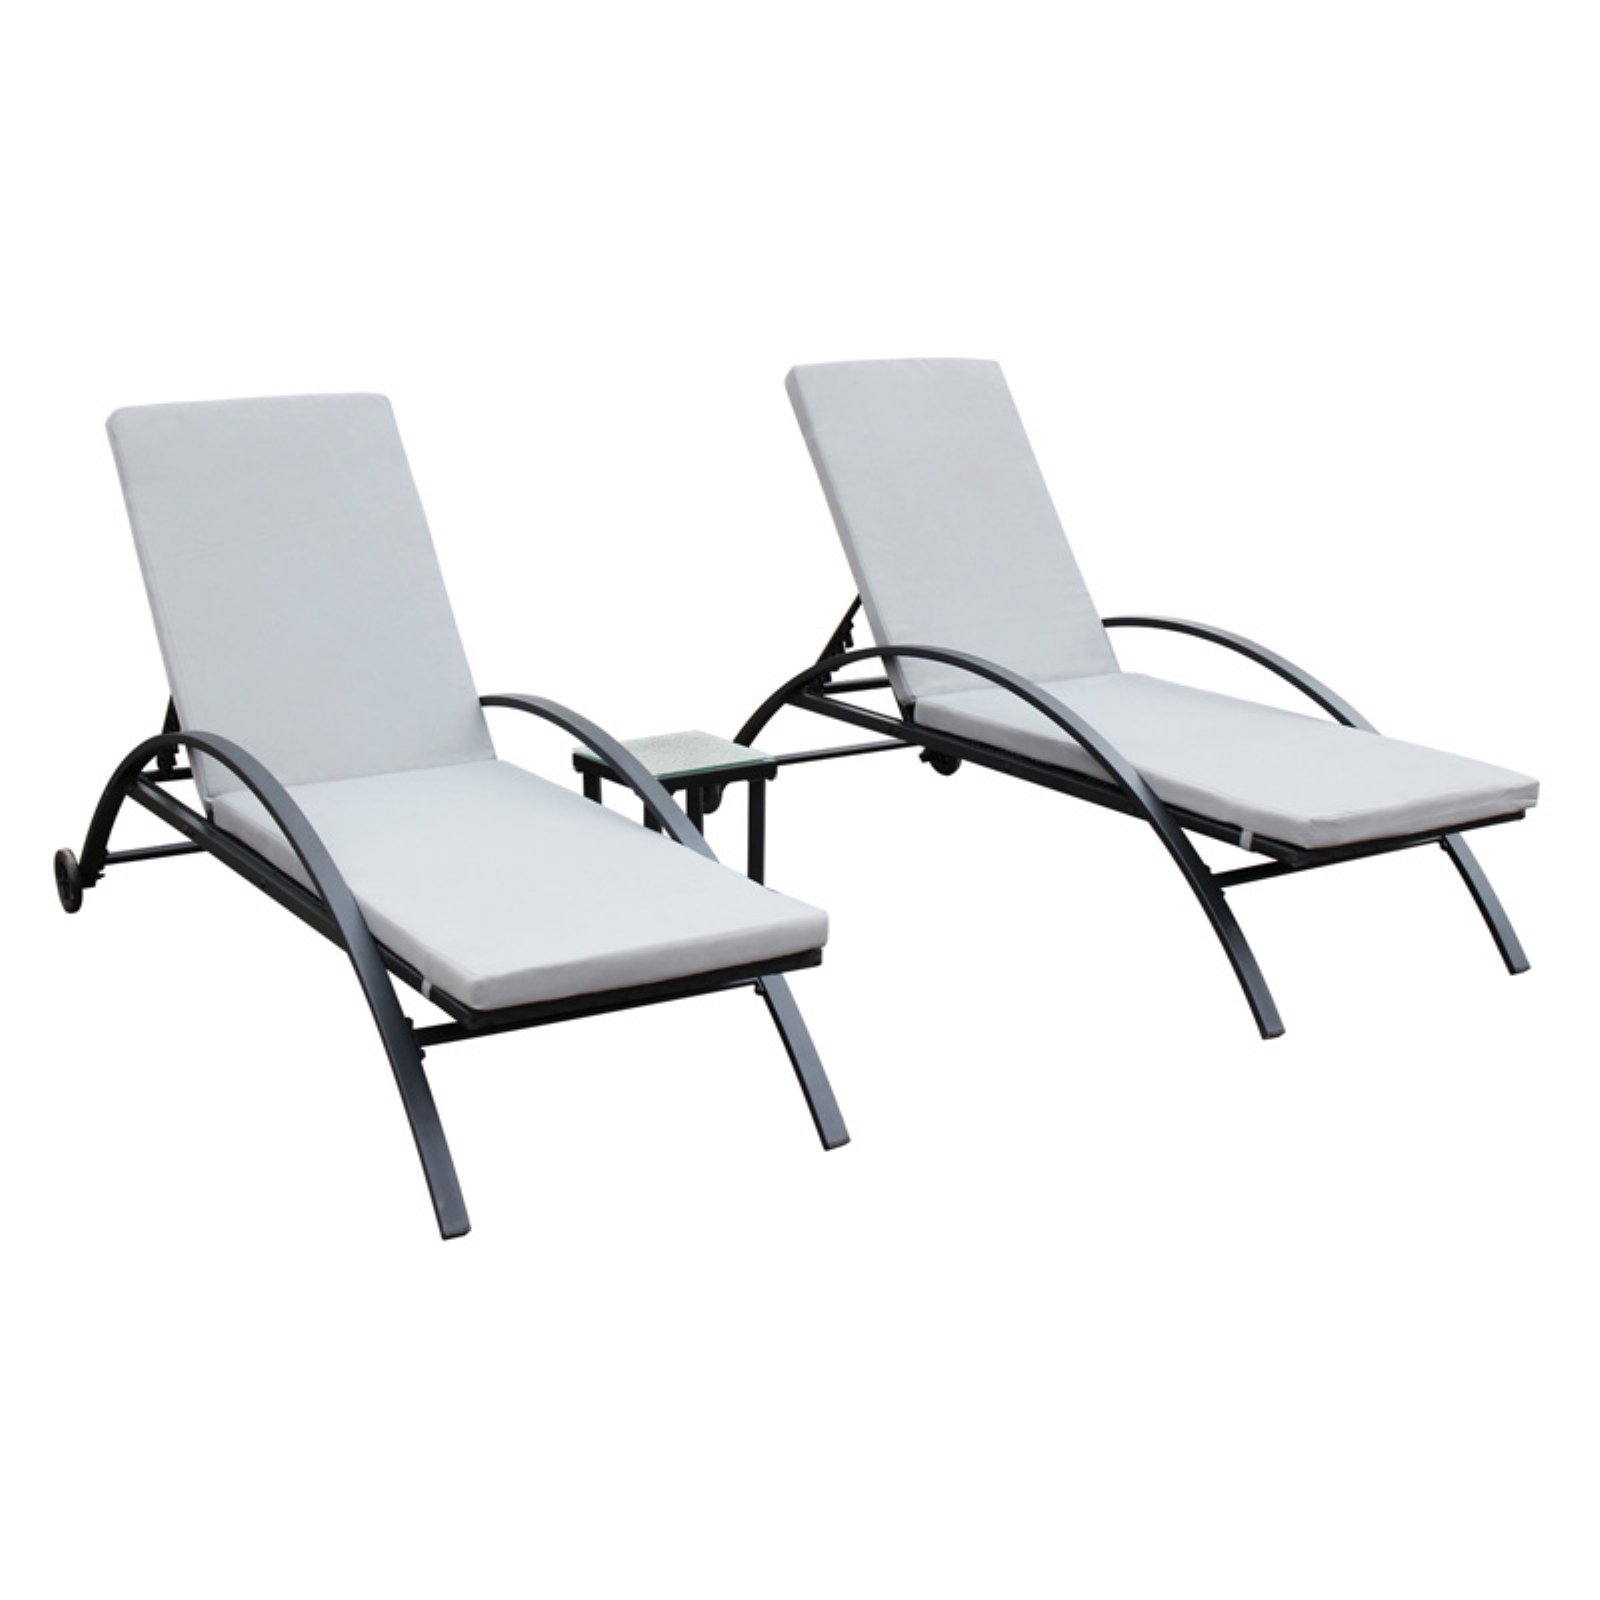 Baner Garden Aluminum 3 Piece Outdoor Adjustable Chaise Lounge Set - image 1 of 10